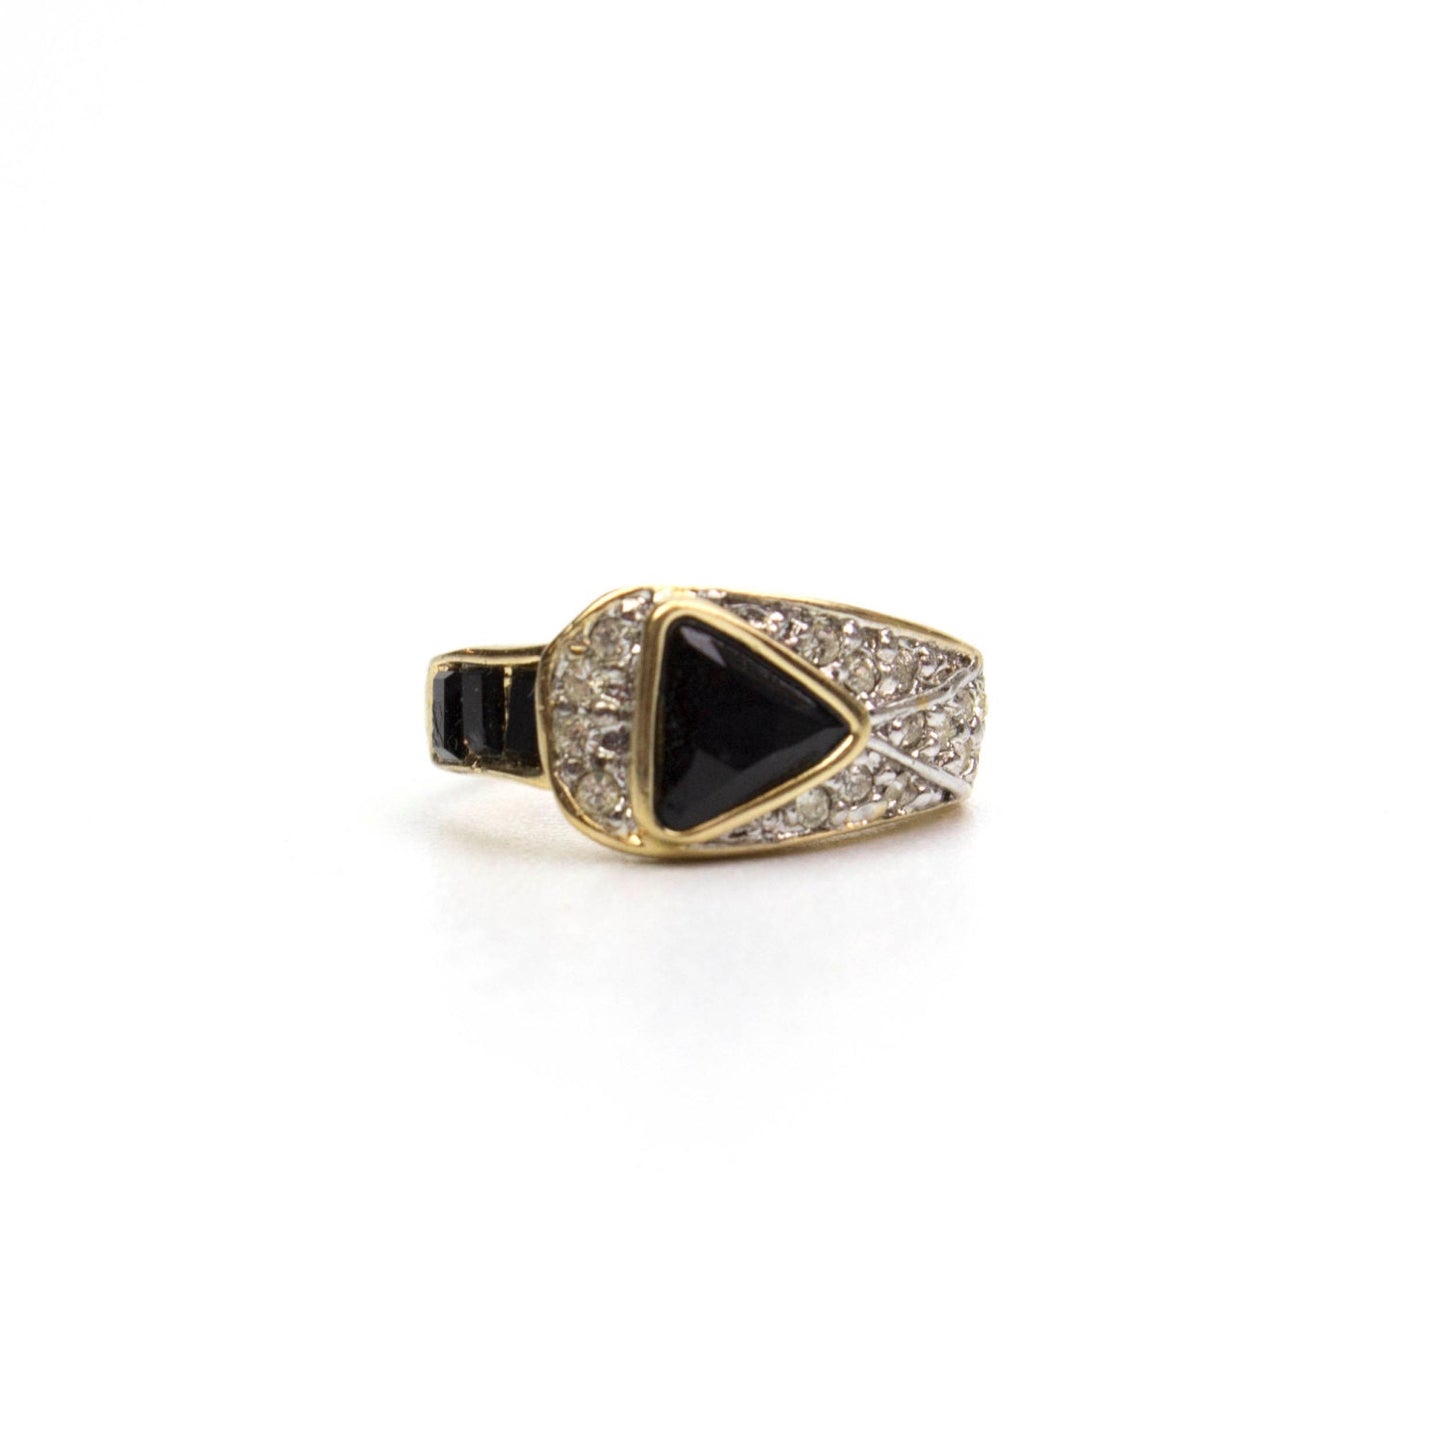 Vintage Ring Pave Trillion Cut Black and Clear Swarovski Crystals 18k Gold  R2932